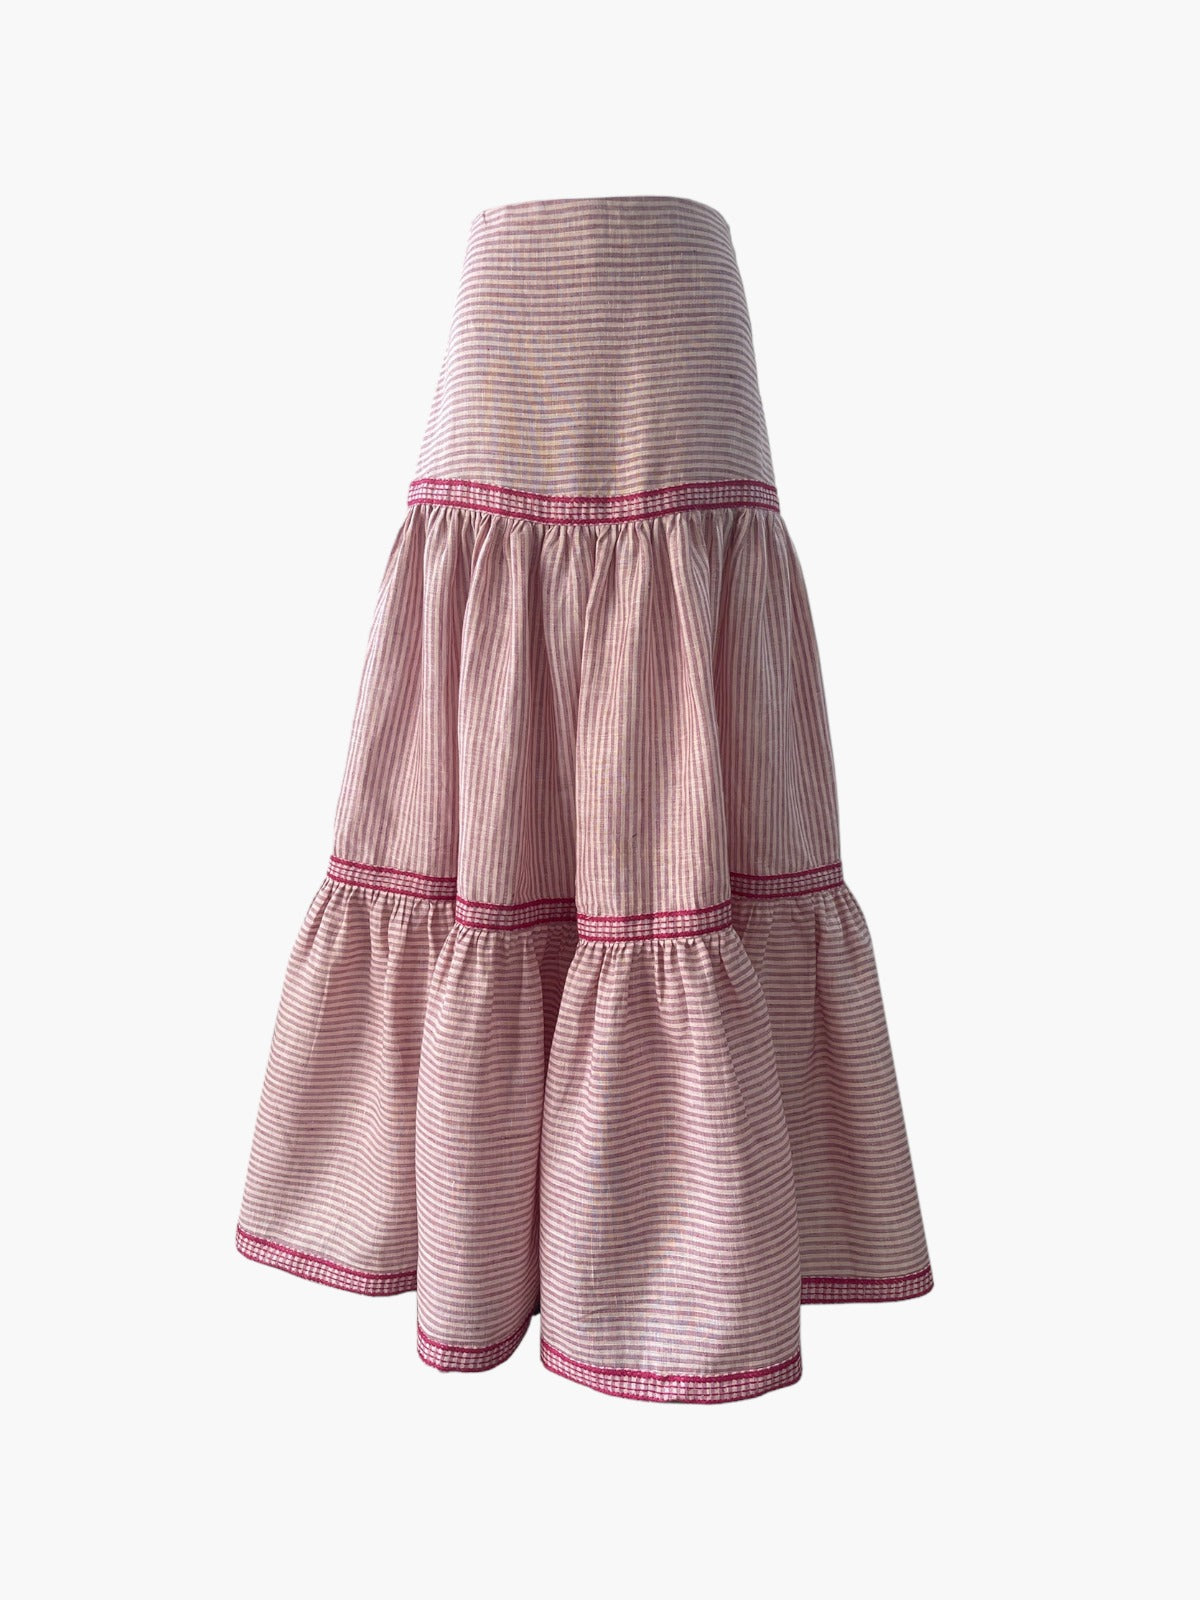 Stripe Skirt | Pink Stripe Skirt | Pink